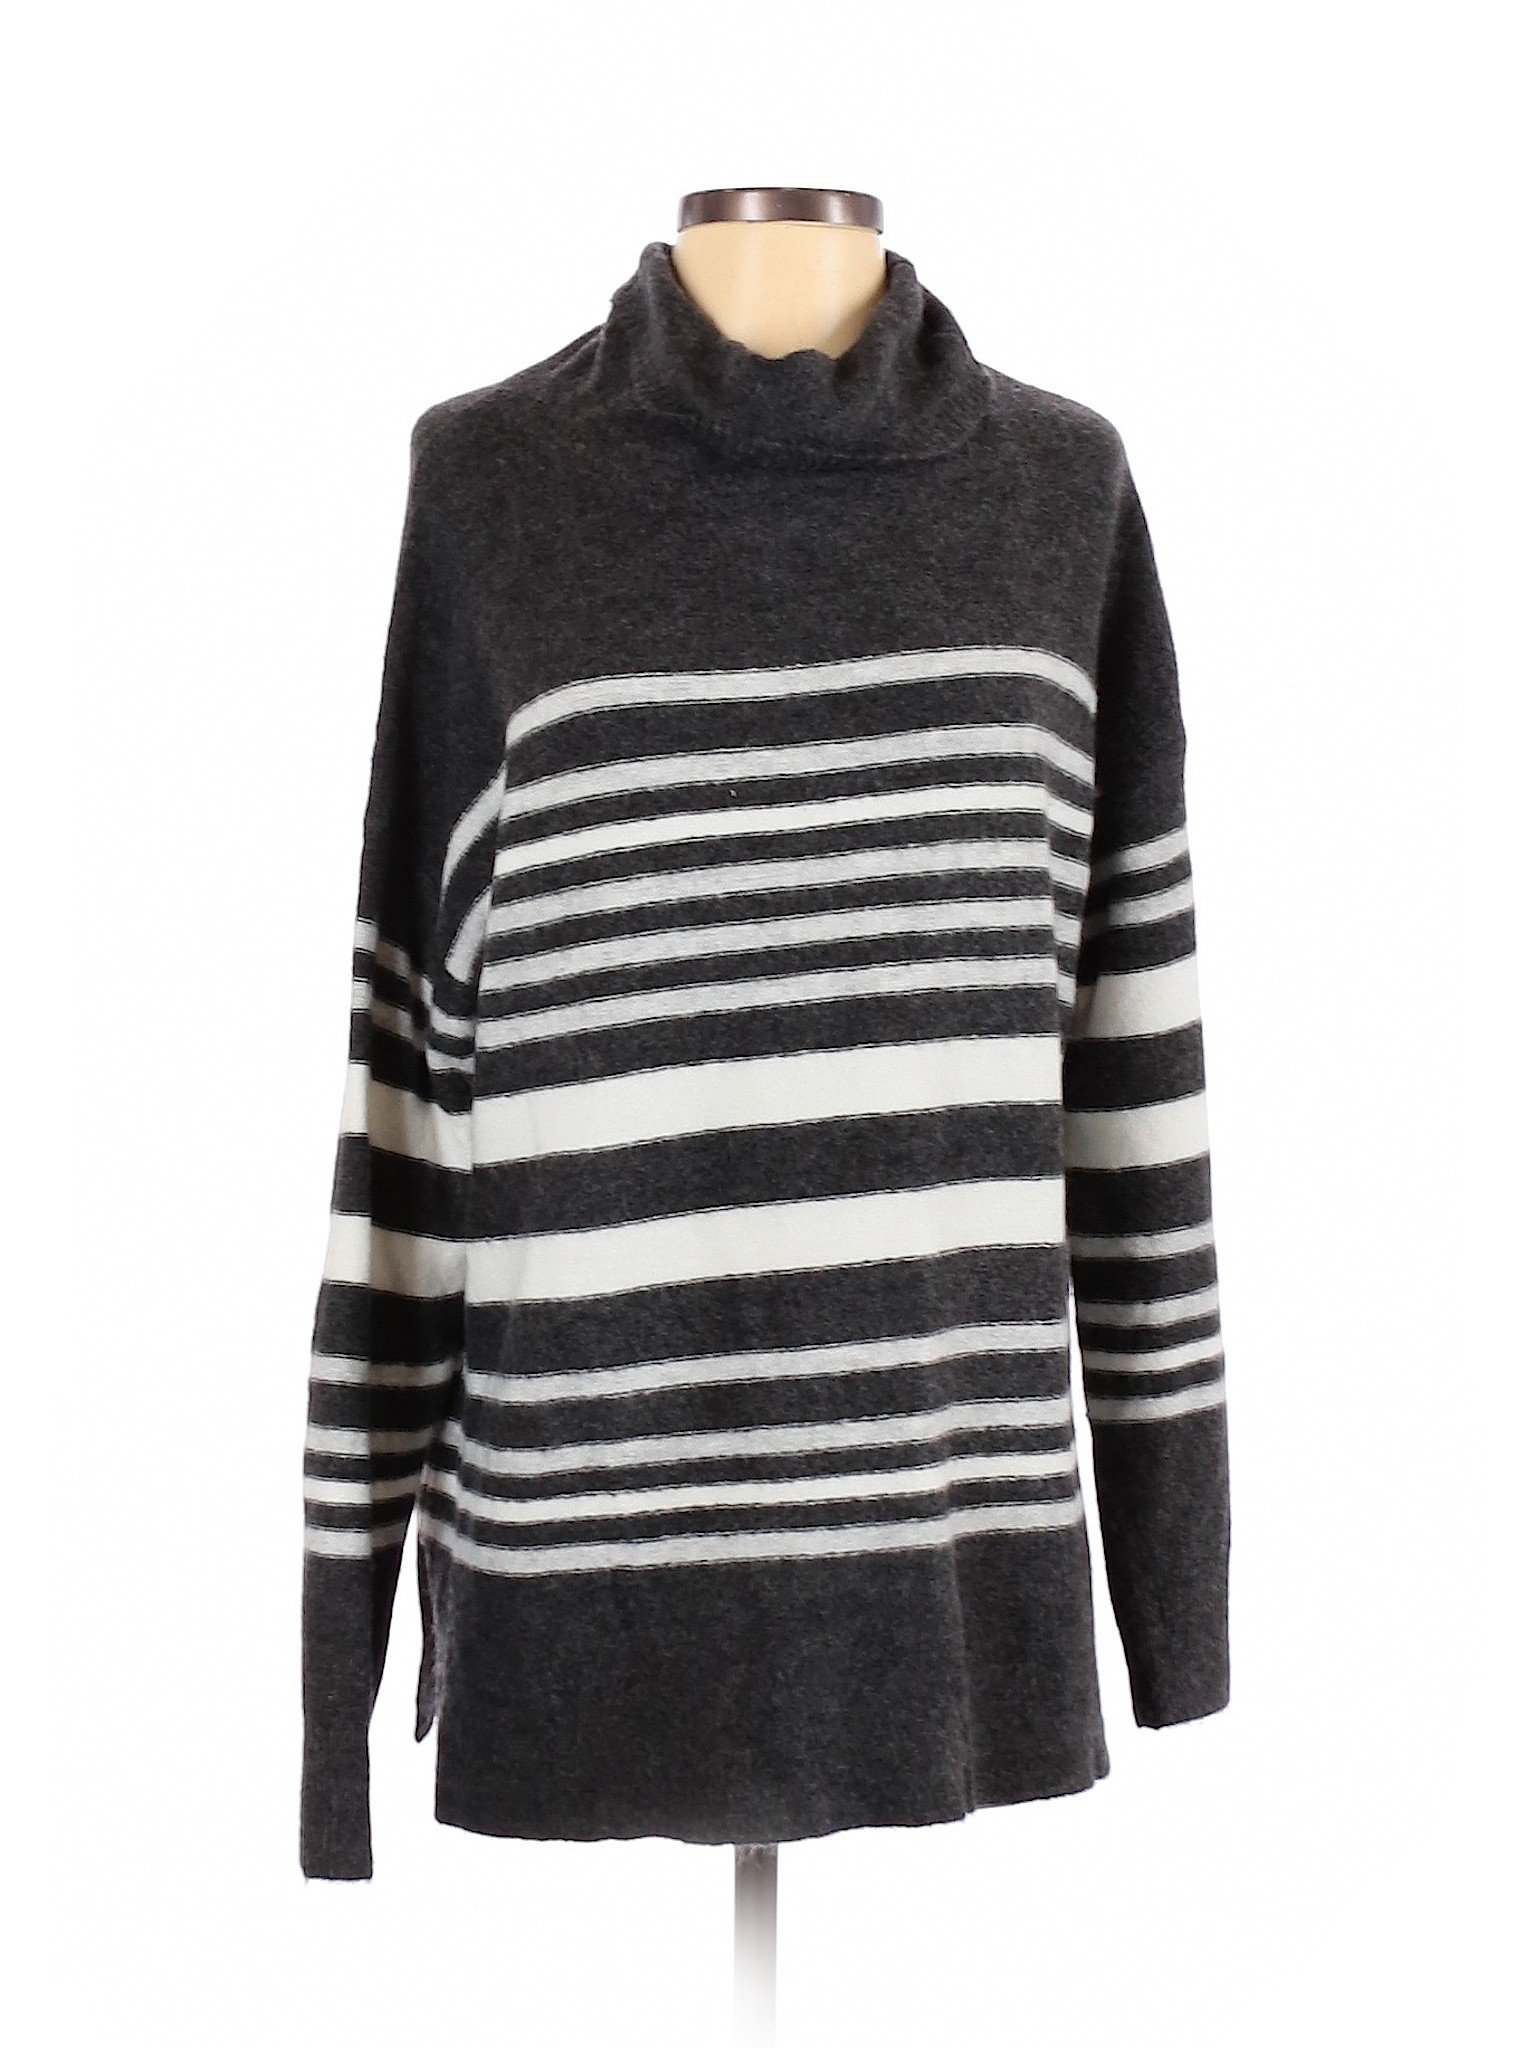 Staccato Women Gray Pullover Sweater S | eBay